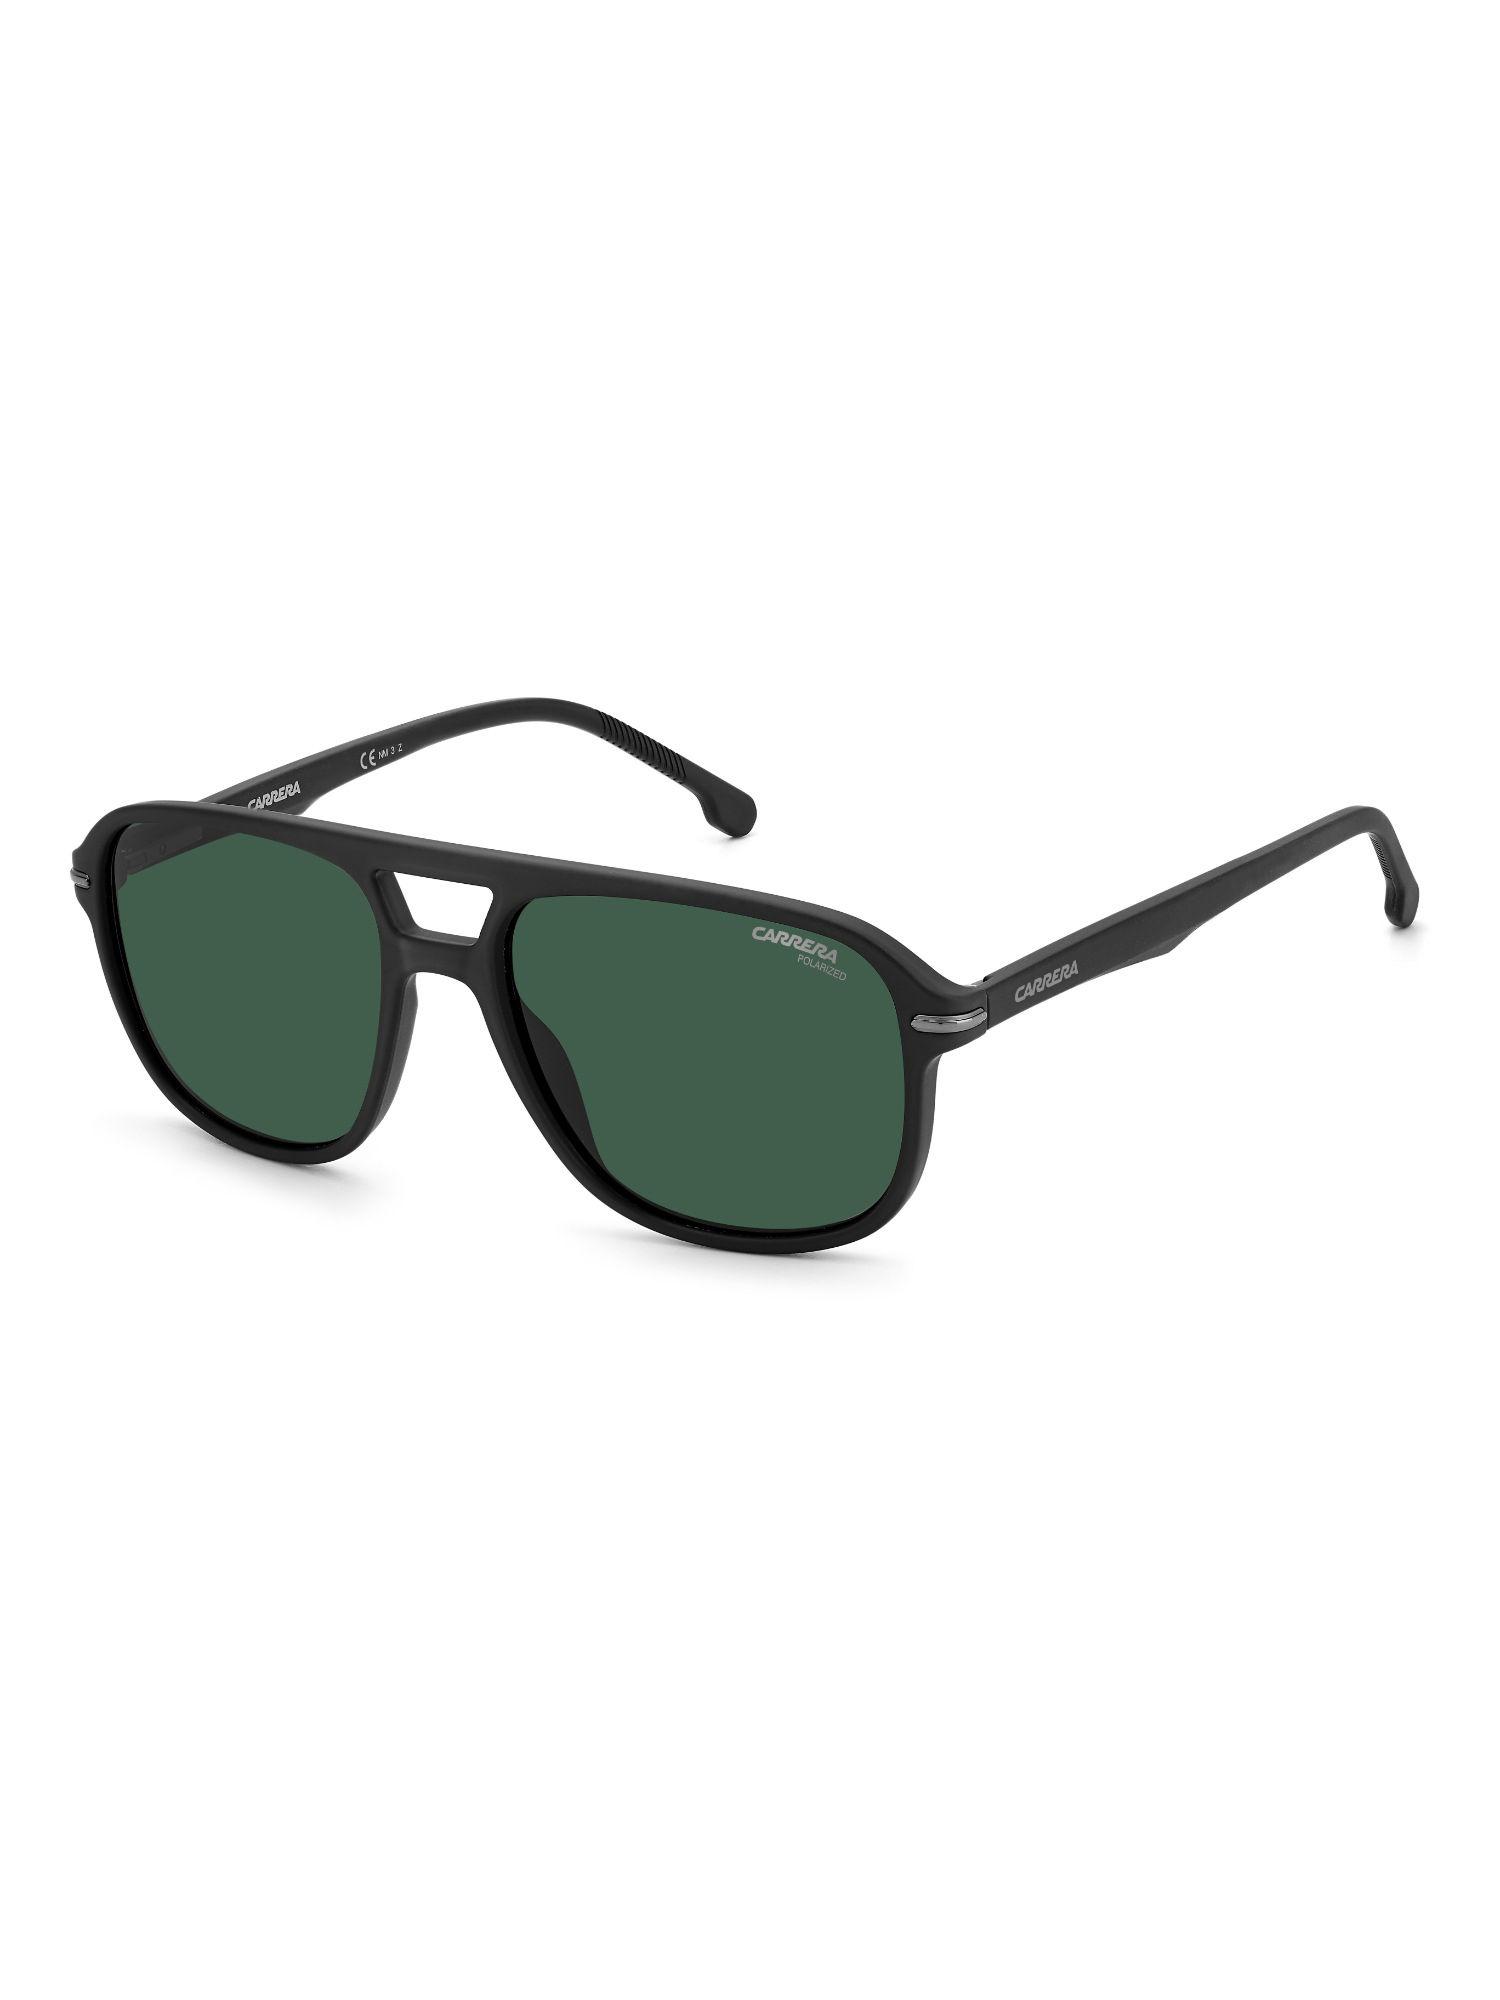 sunglasses green polarized lens rectangular sunglass matte black frame